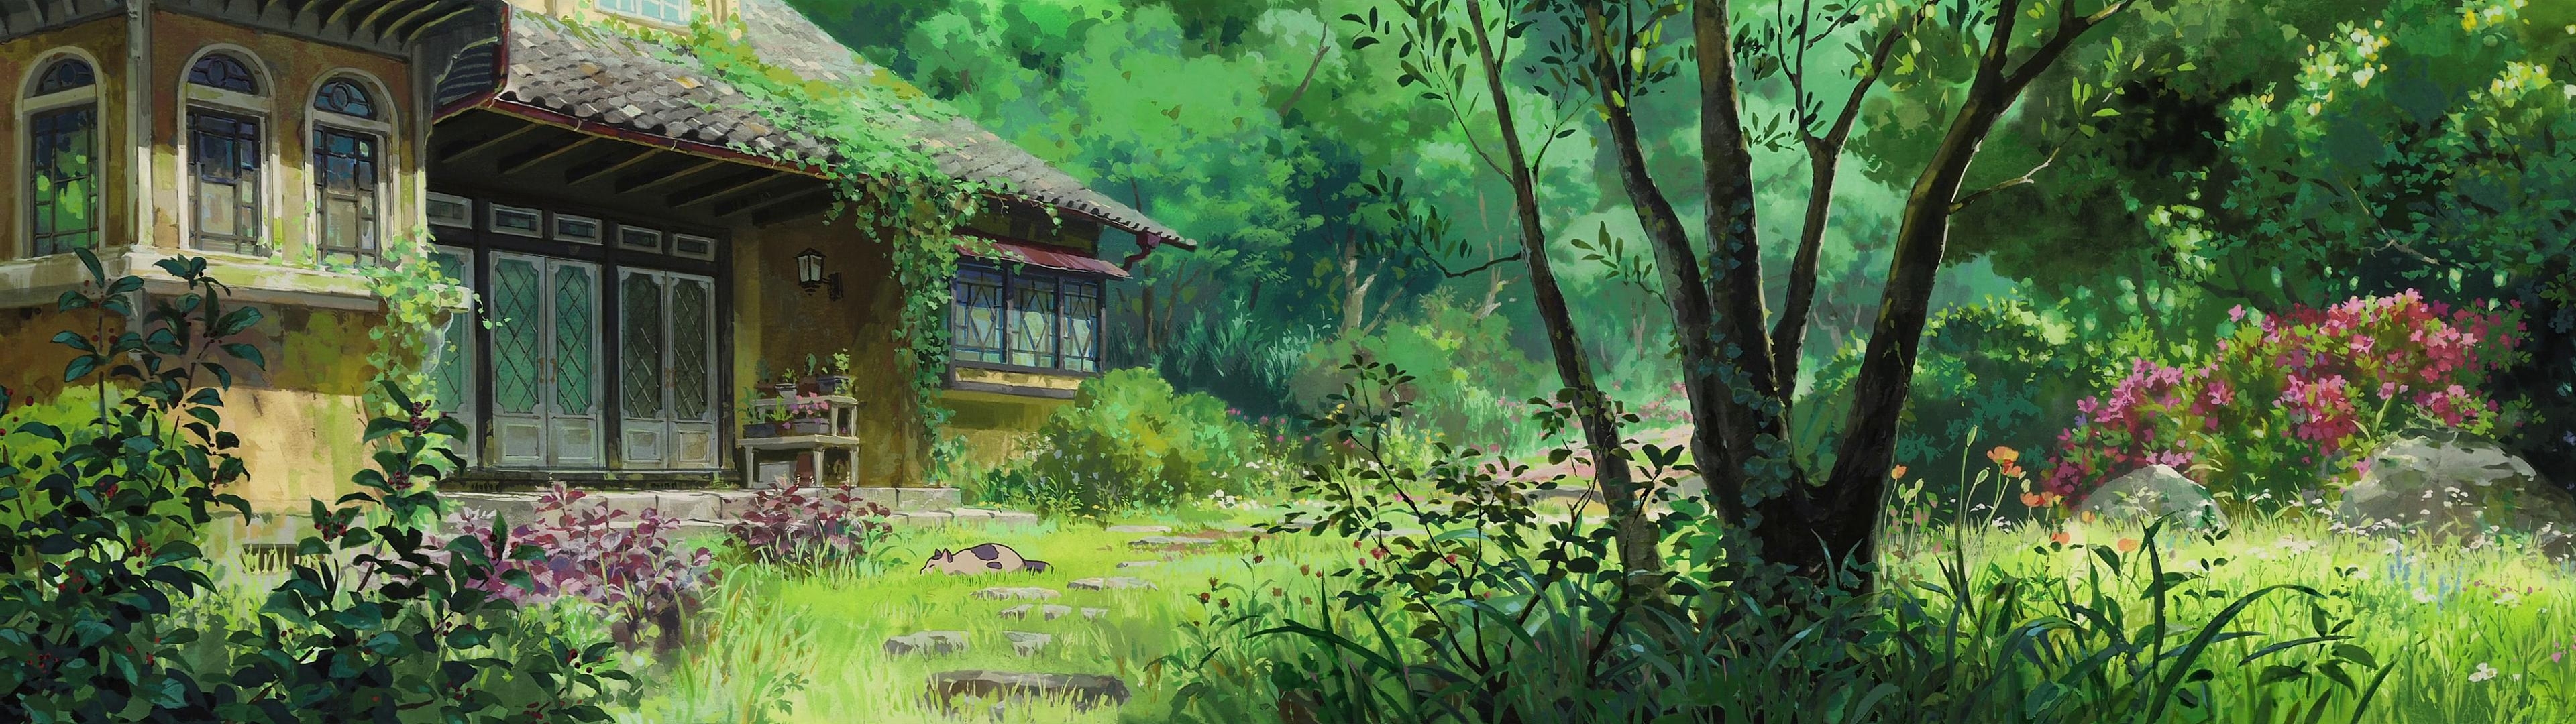 10 Most Popular Studio Ghibli Dual Monitor Wallpaper FULL HD 1920×1080 For PC Desktop